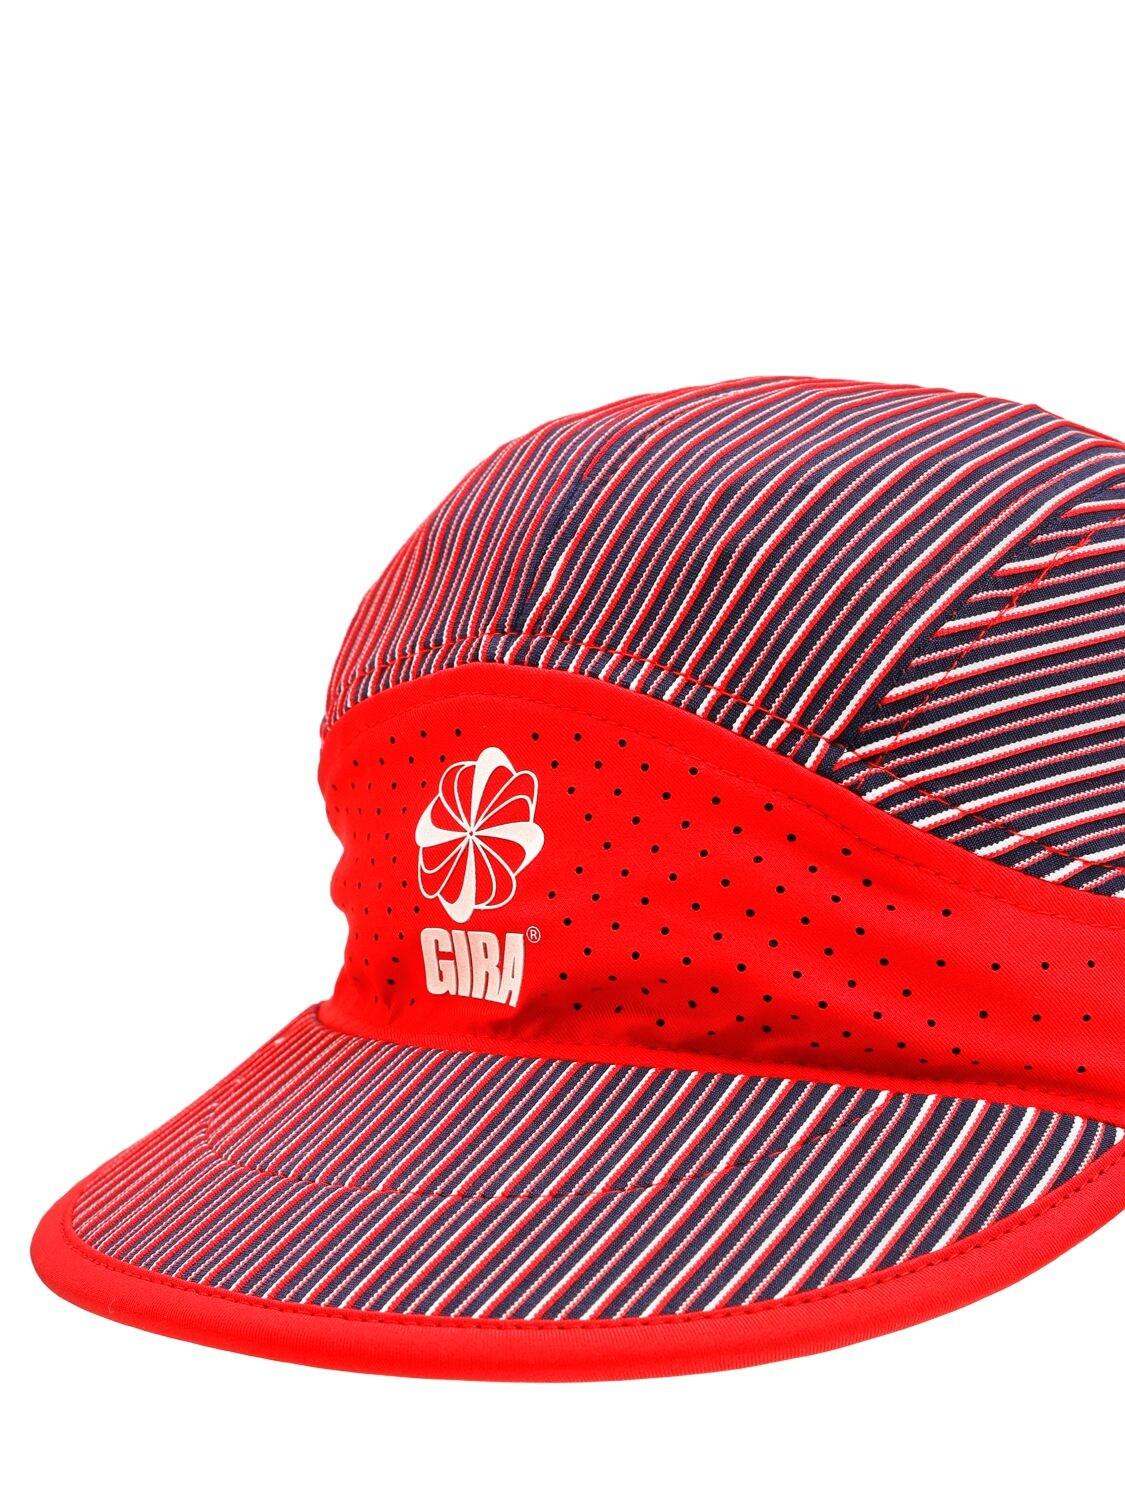 Nike Gyakusou Xe Cap in University Red (Red) for Men - Lyst